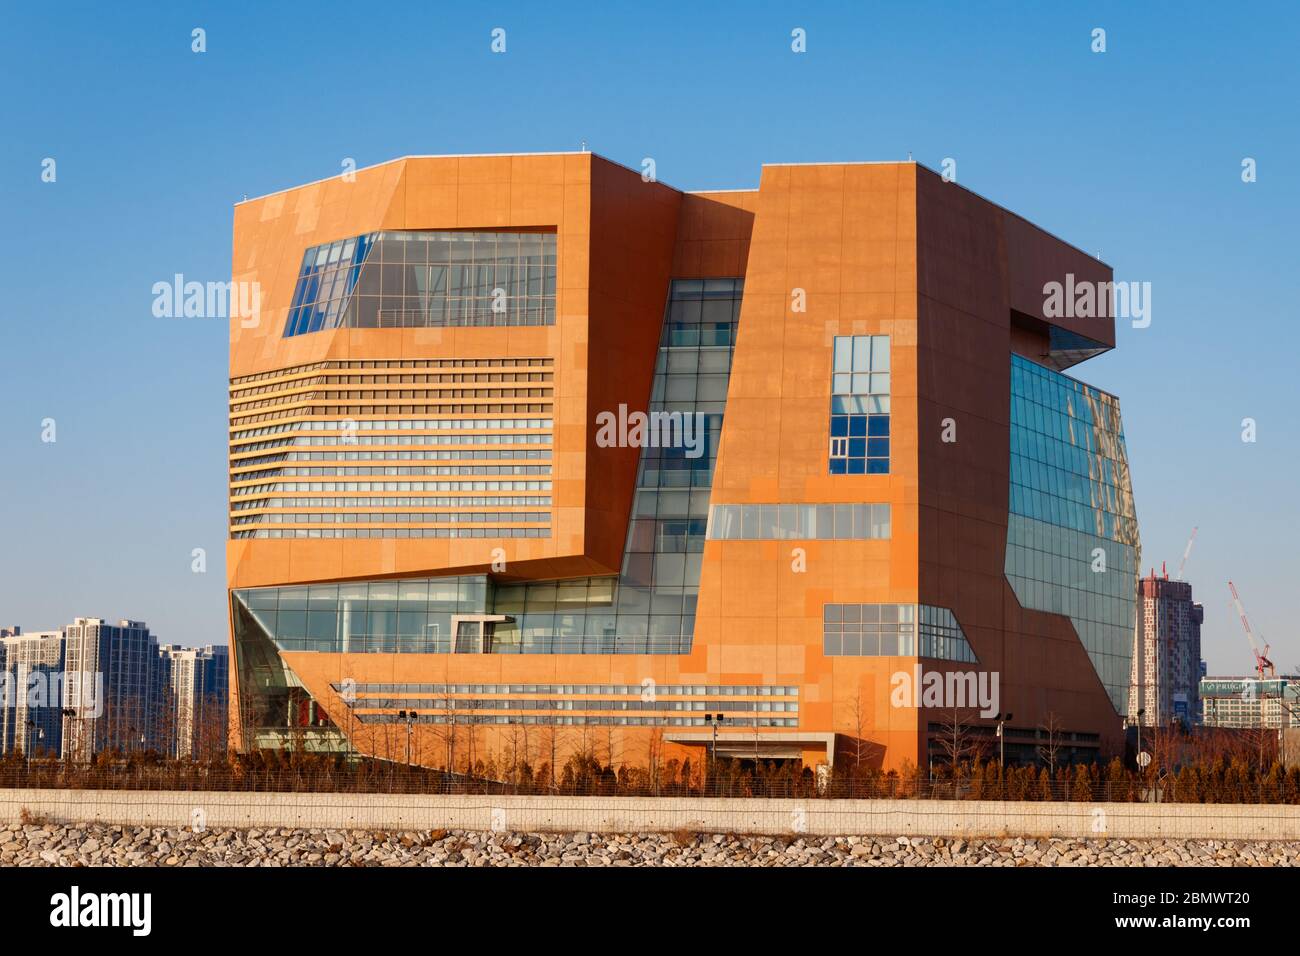 Incheon Songdo, Korea, 14 Jan 2020 - Incheon Songdo Art Center. Incheon Art Center Scenery. Stock Photo